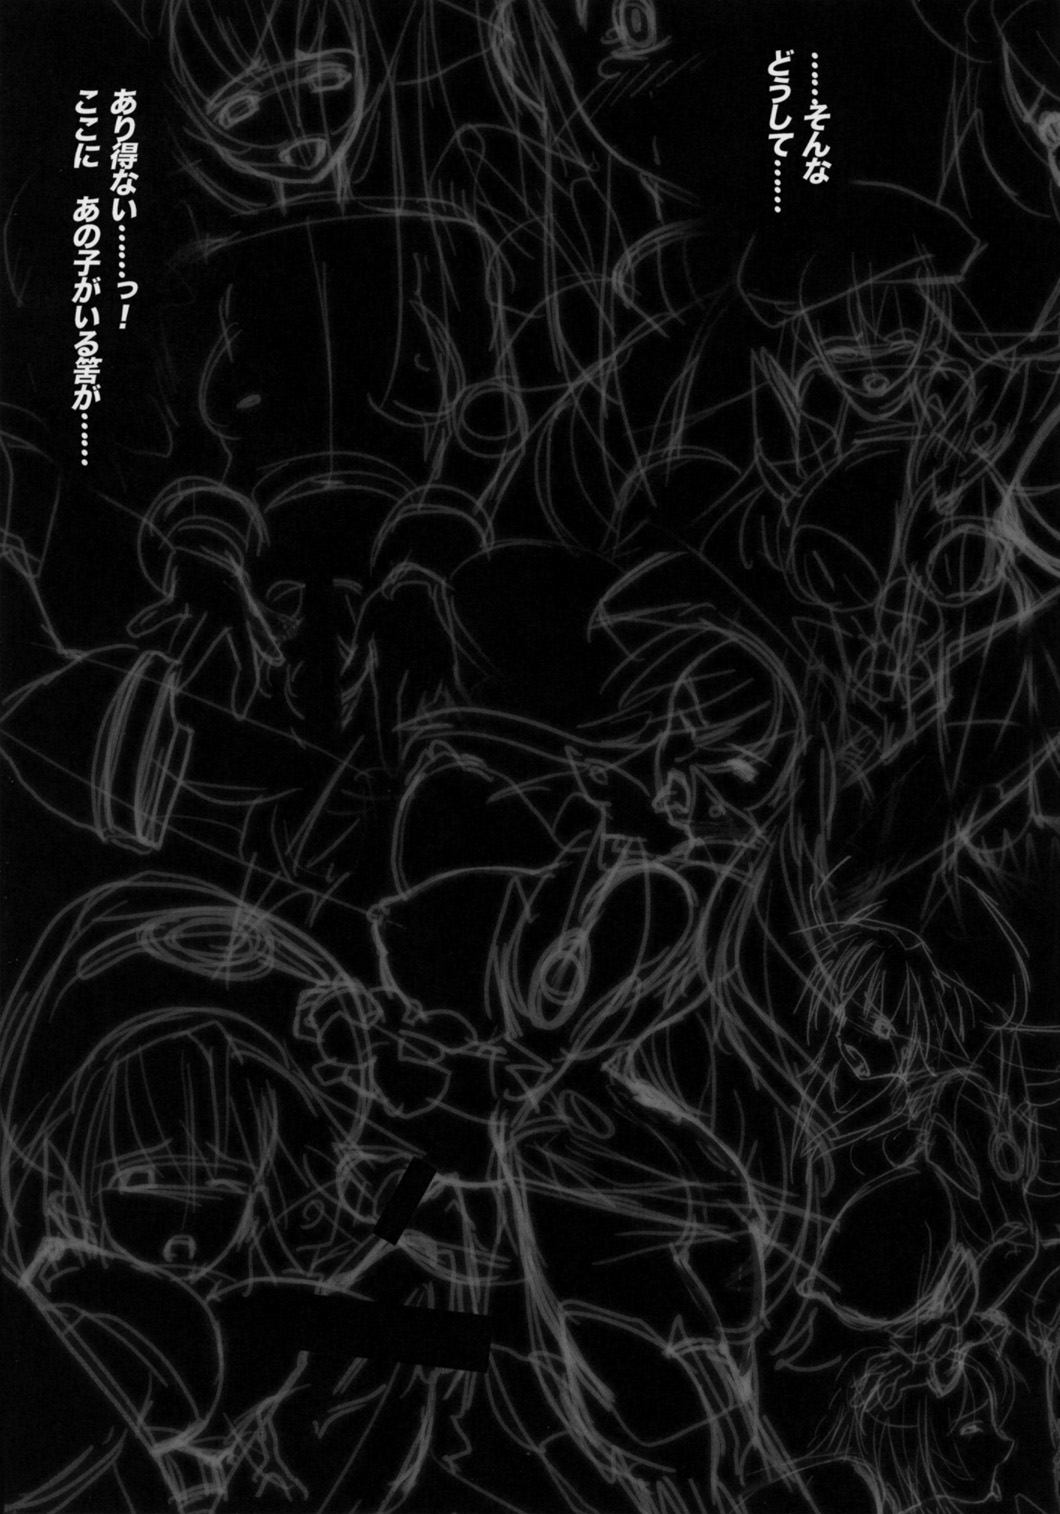 (COMIC1☆4) [Synthetic Garden (美和美和) & Galaxist (Blade)] 幻影ノ饗宴 Preview (ファンタシースターポータブル 2)